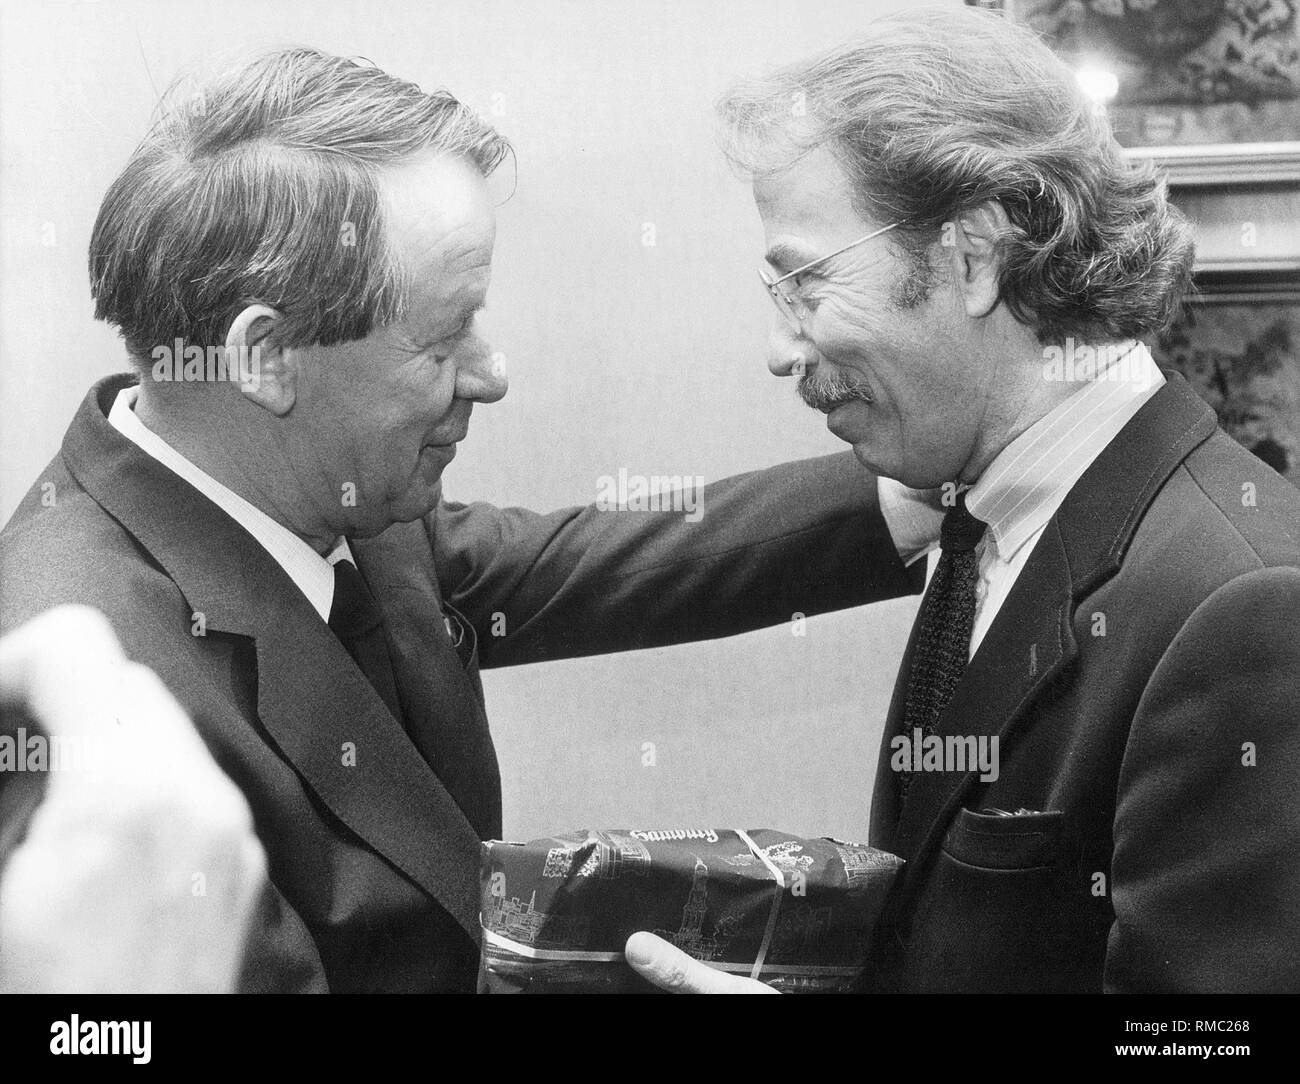 The writer Walter Kempowski (right) congratulates his colleague Siegfried Lenz on his 60th birthday. Stock Photo